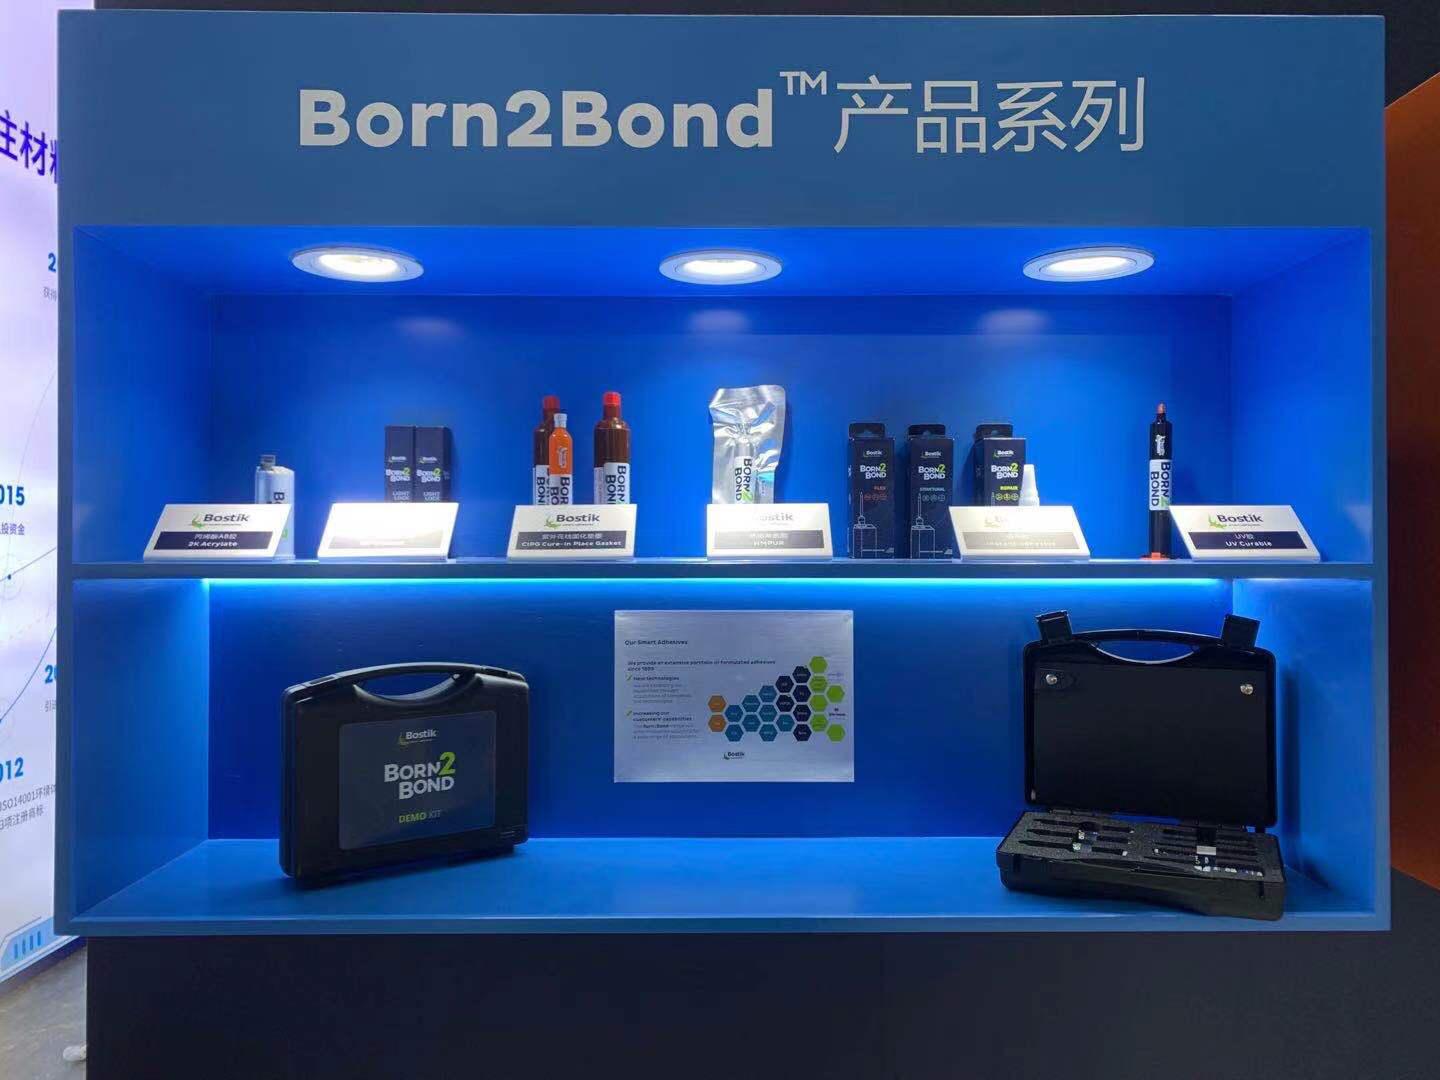 Born2Bond products on display